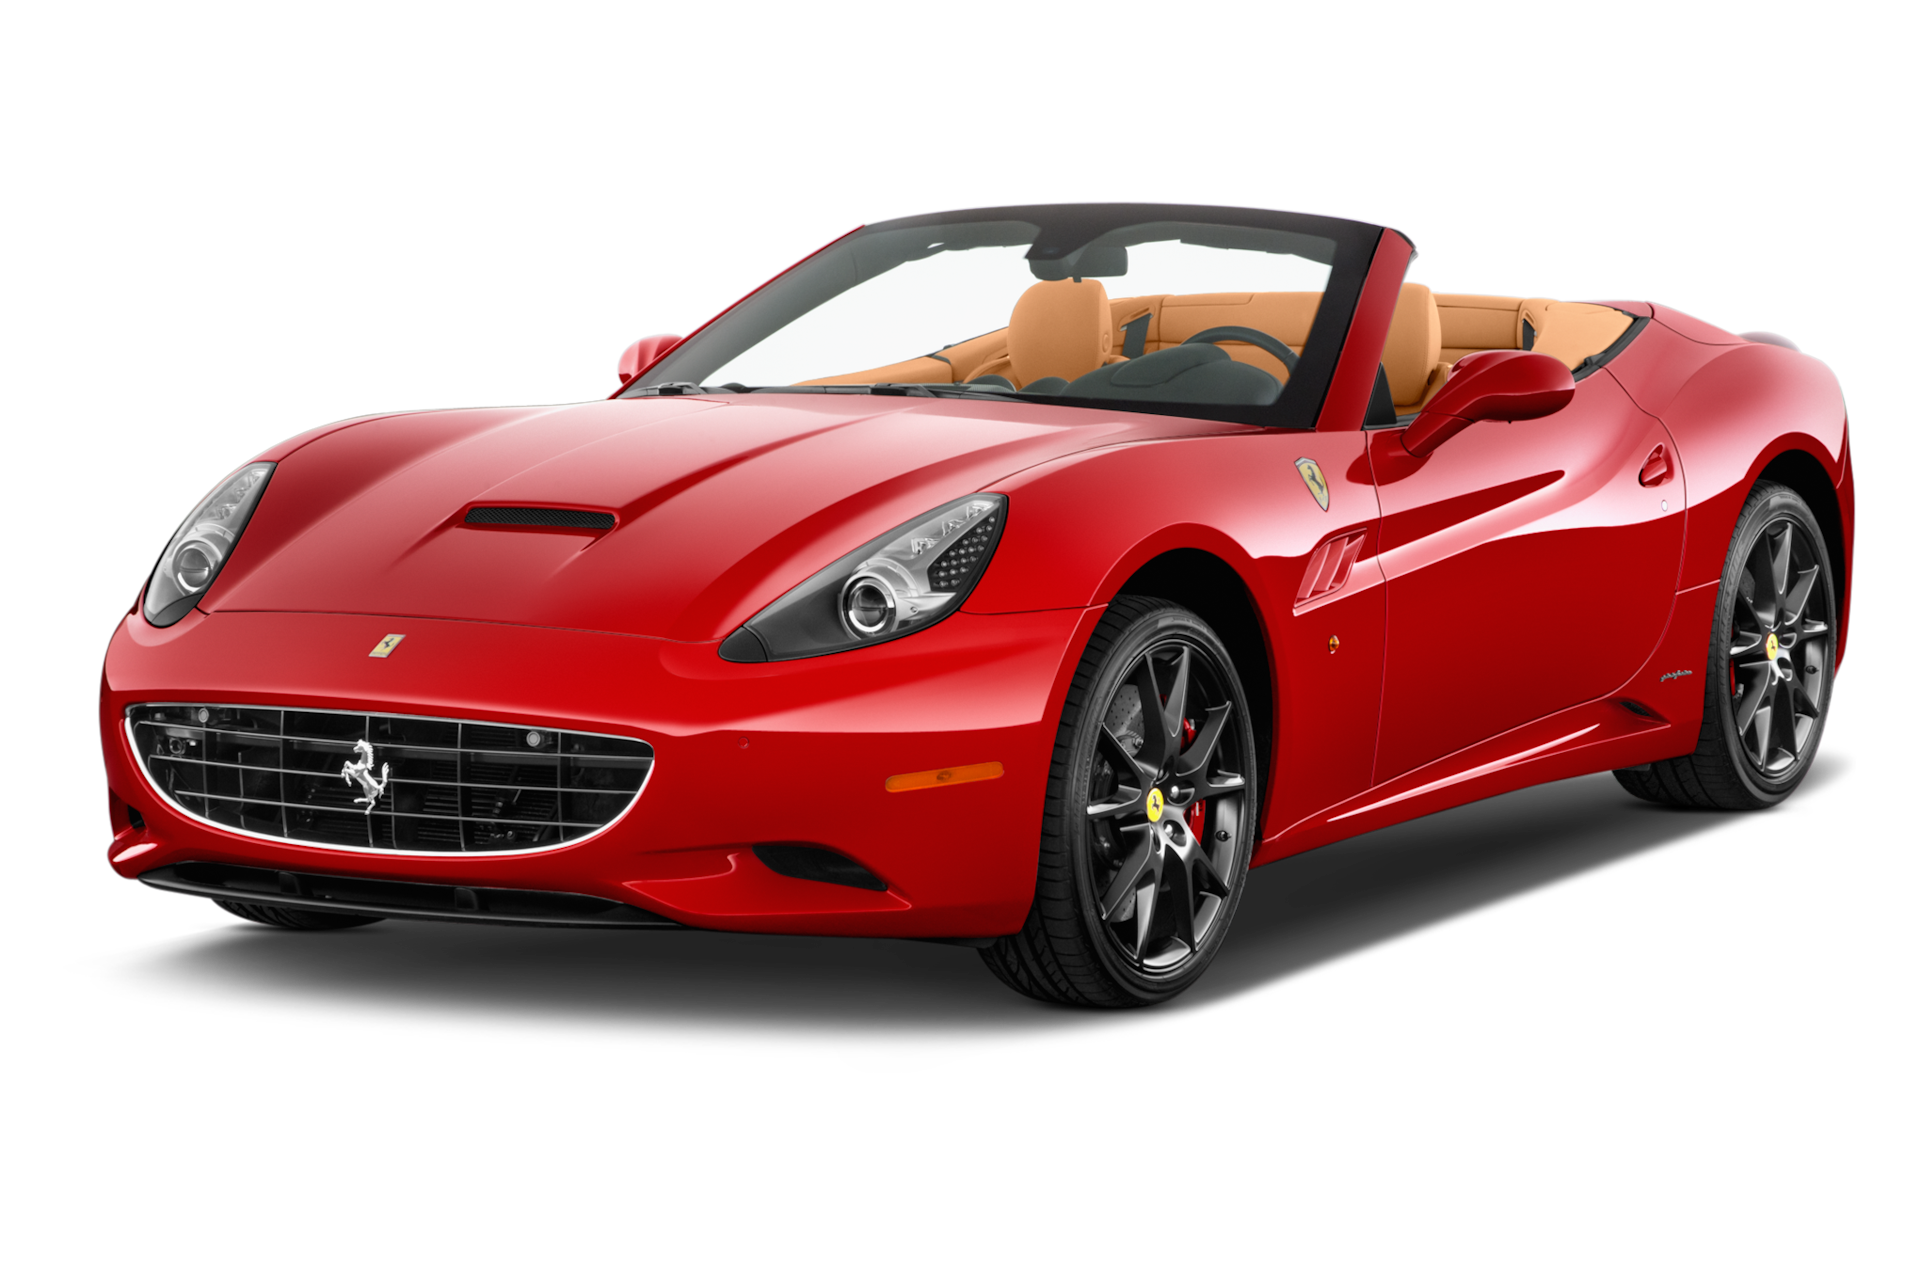 2010 Ferrari California Prices, Reviews, and Photos - MotorTrend